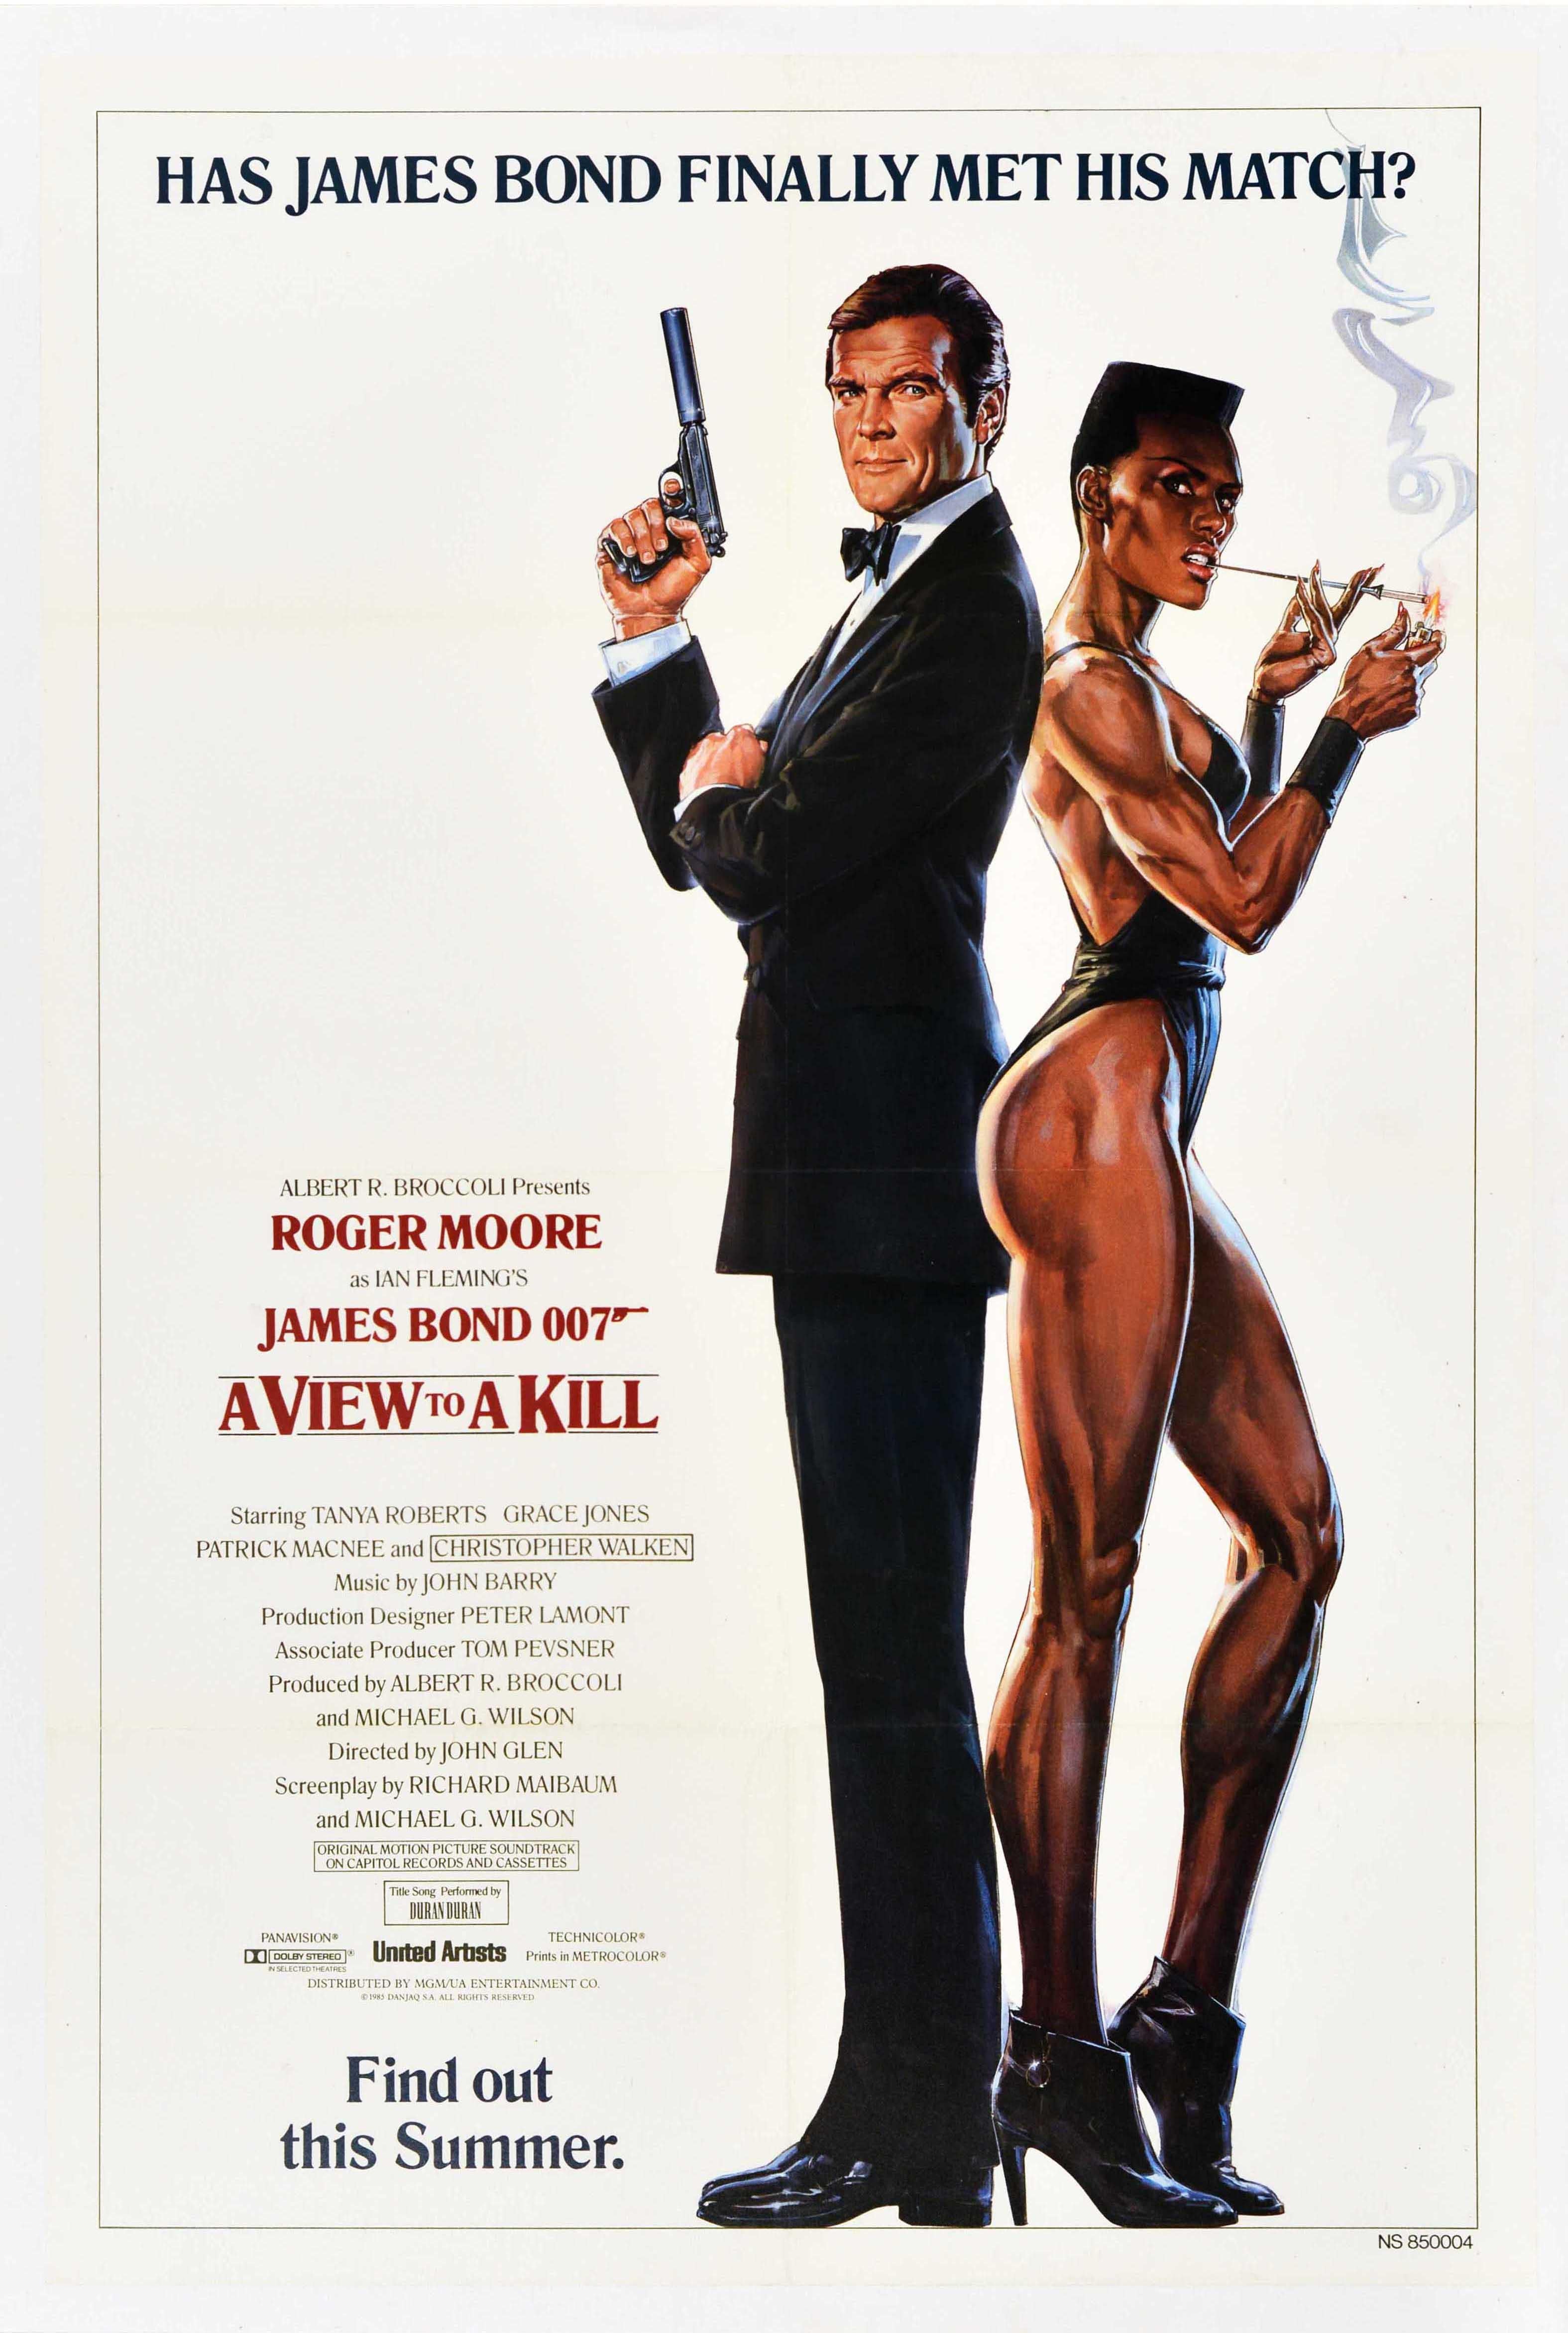 Dan Goozee Print - Original Vintage Movie Poster James Bond A View To A Kill 007 Roger Moore Goozee